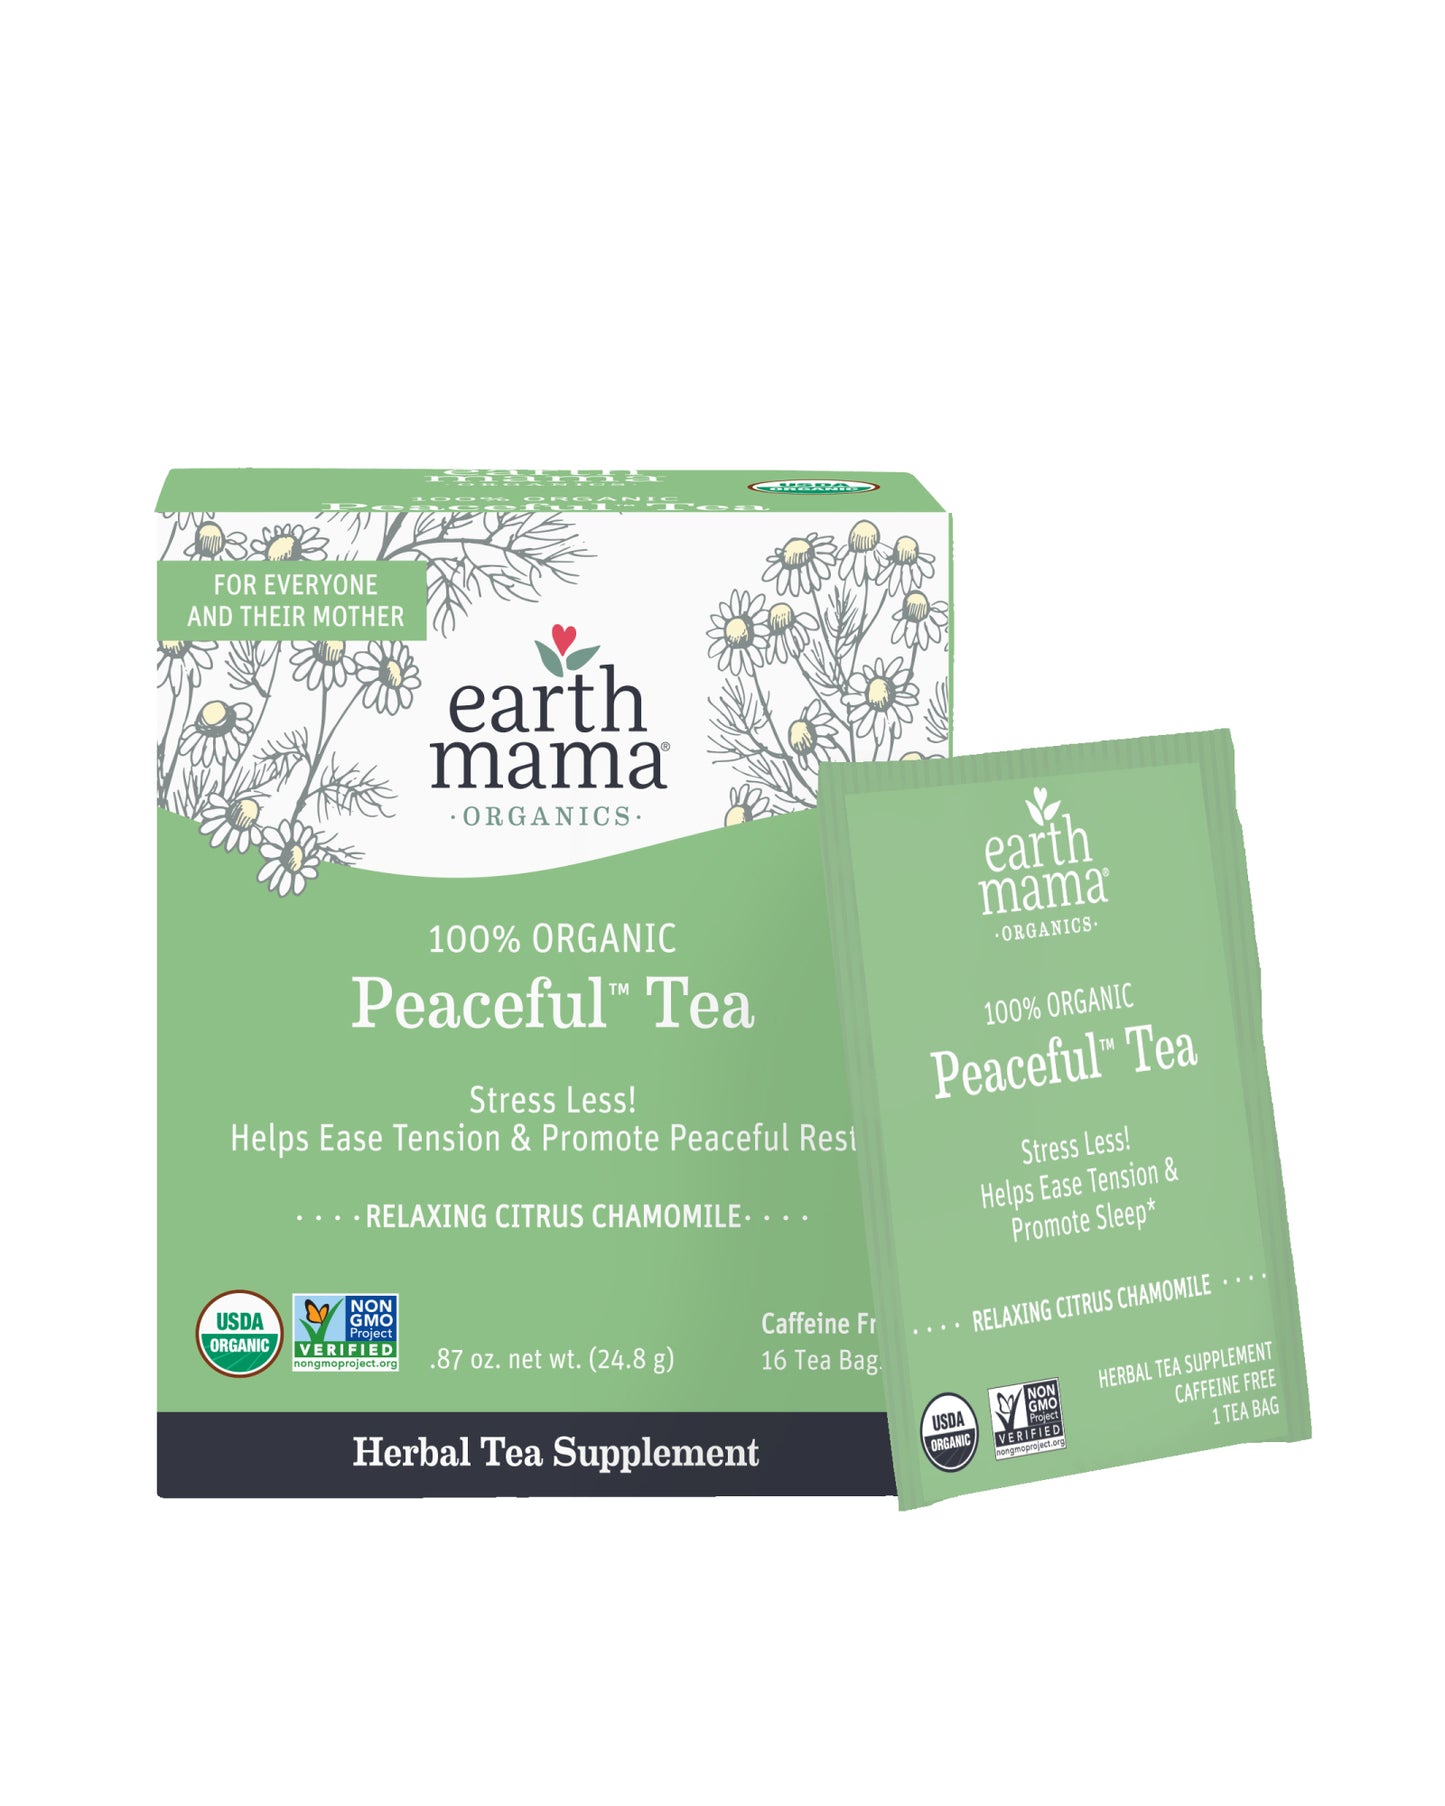 Organic Peaceful Tea